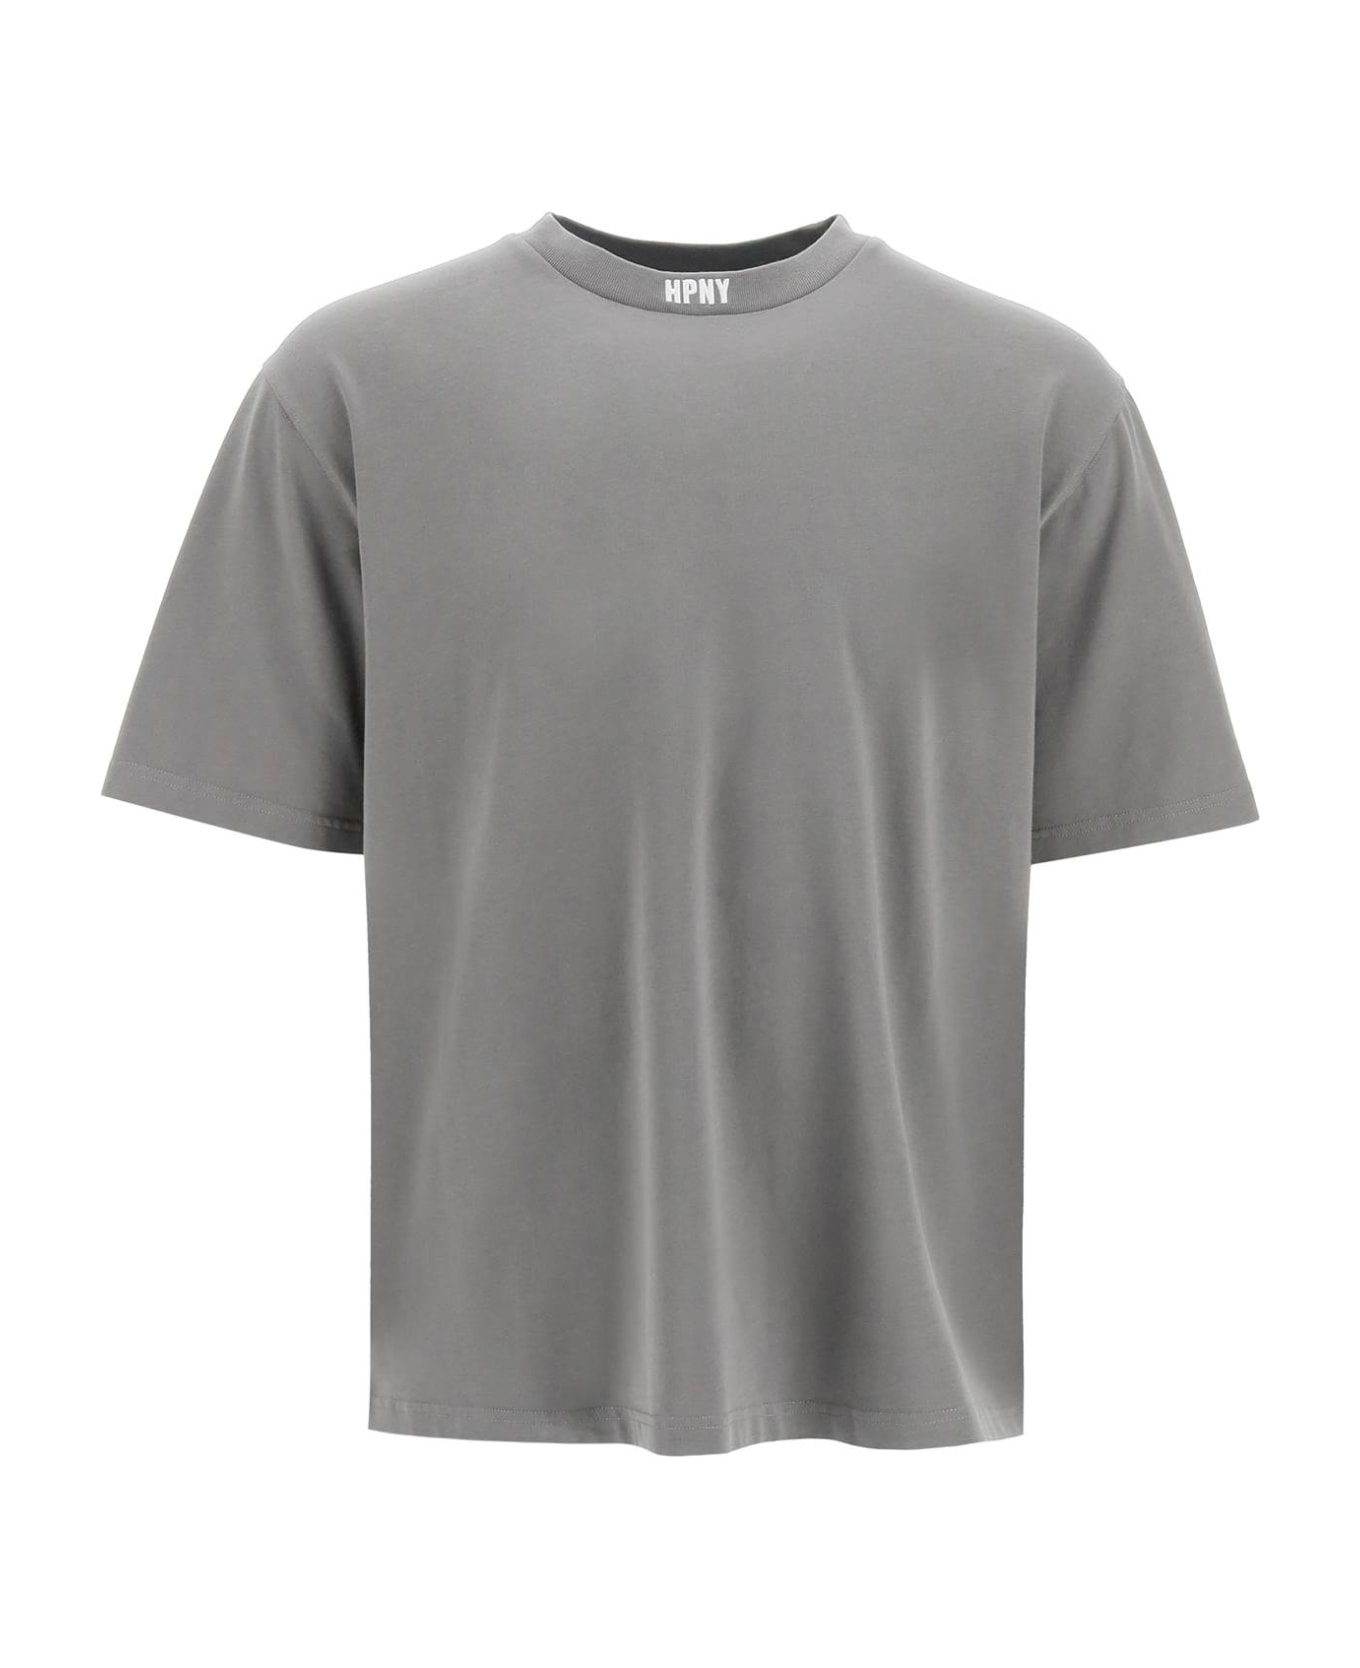 HERON PRESTON Oversize T-shirt - grey シャツ